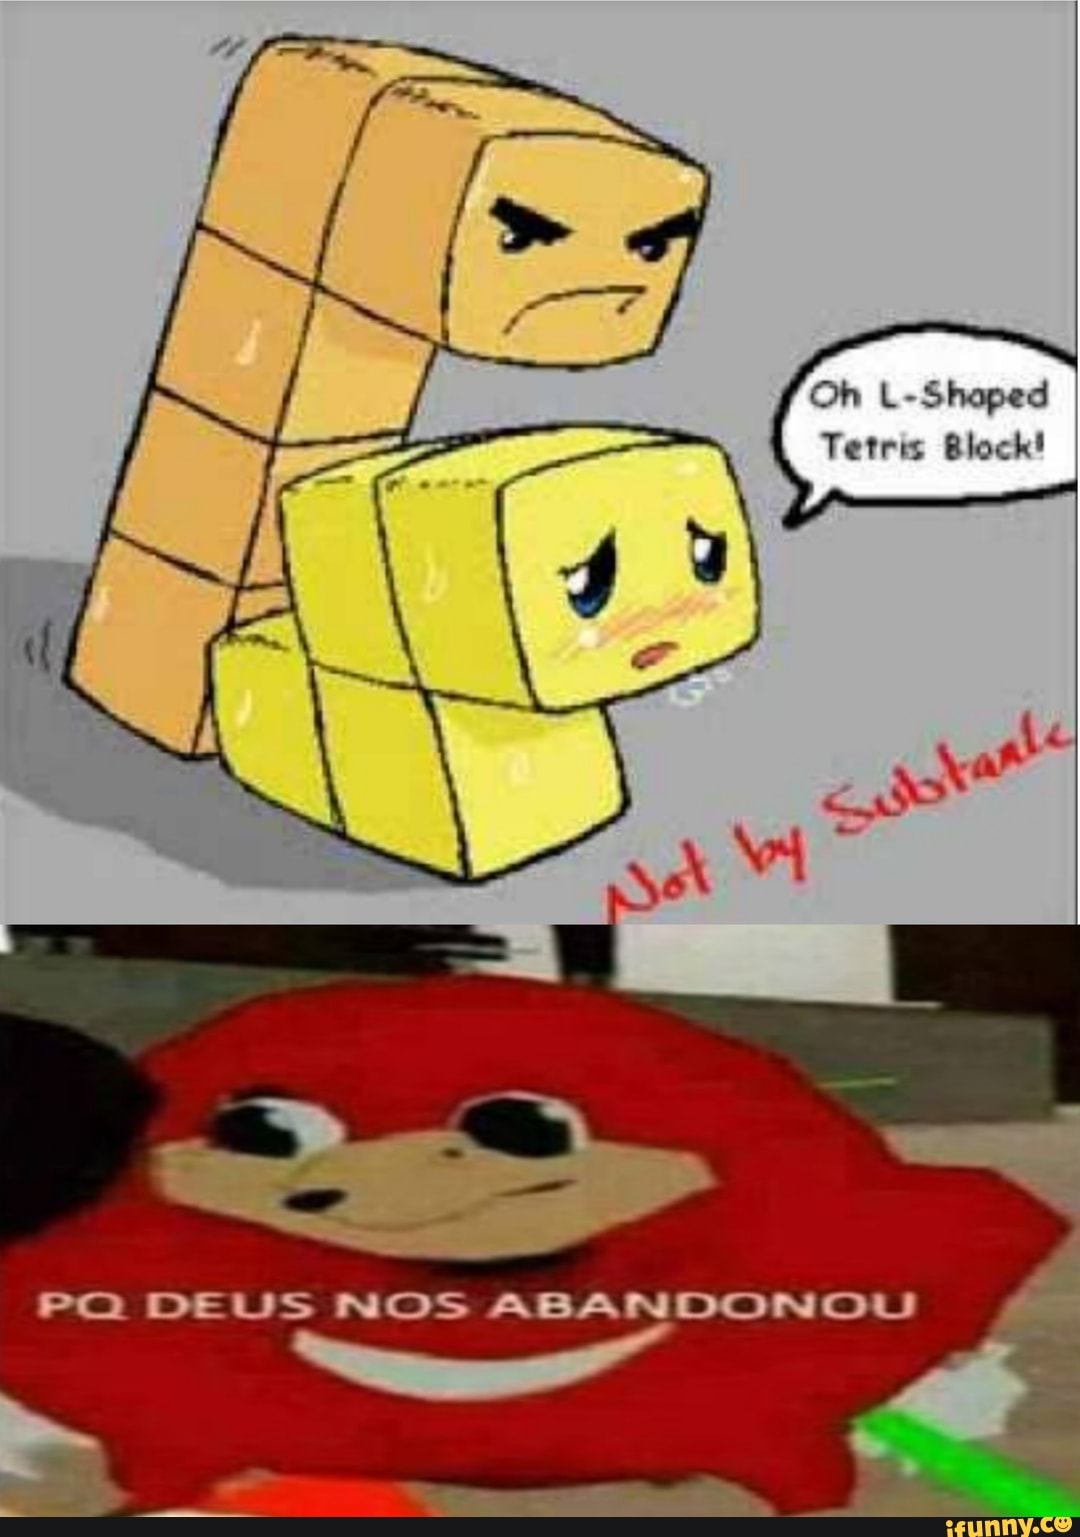 Oh L- Shaped Tetris Block! - iFunny Brazil